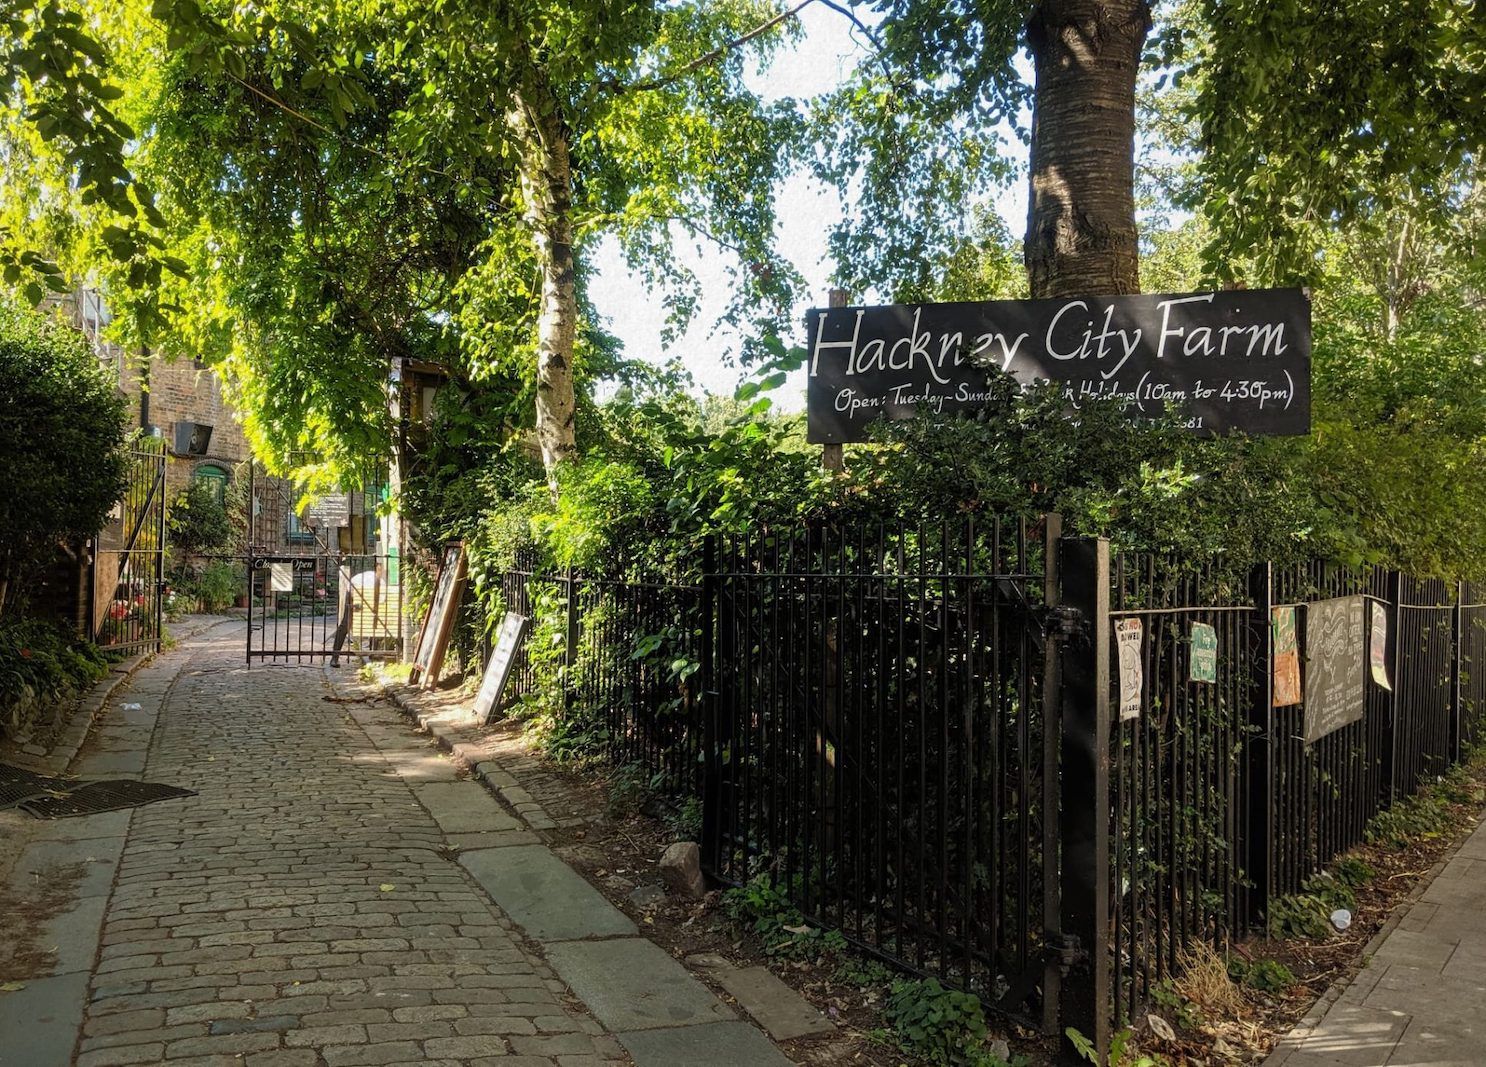 Hackney City Farm – February half-term activities